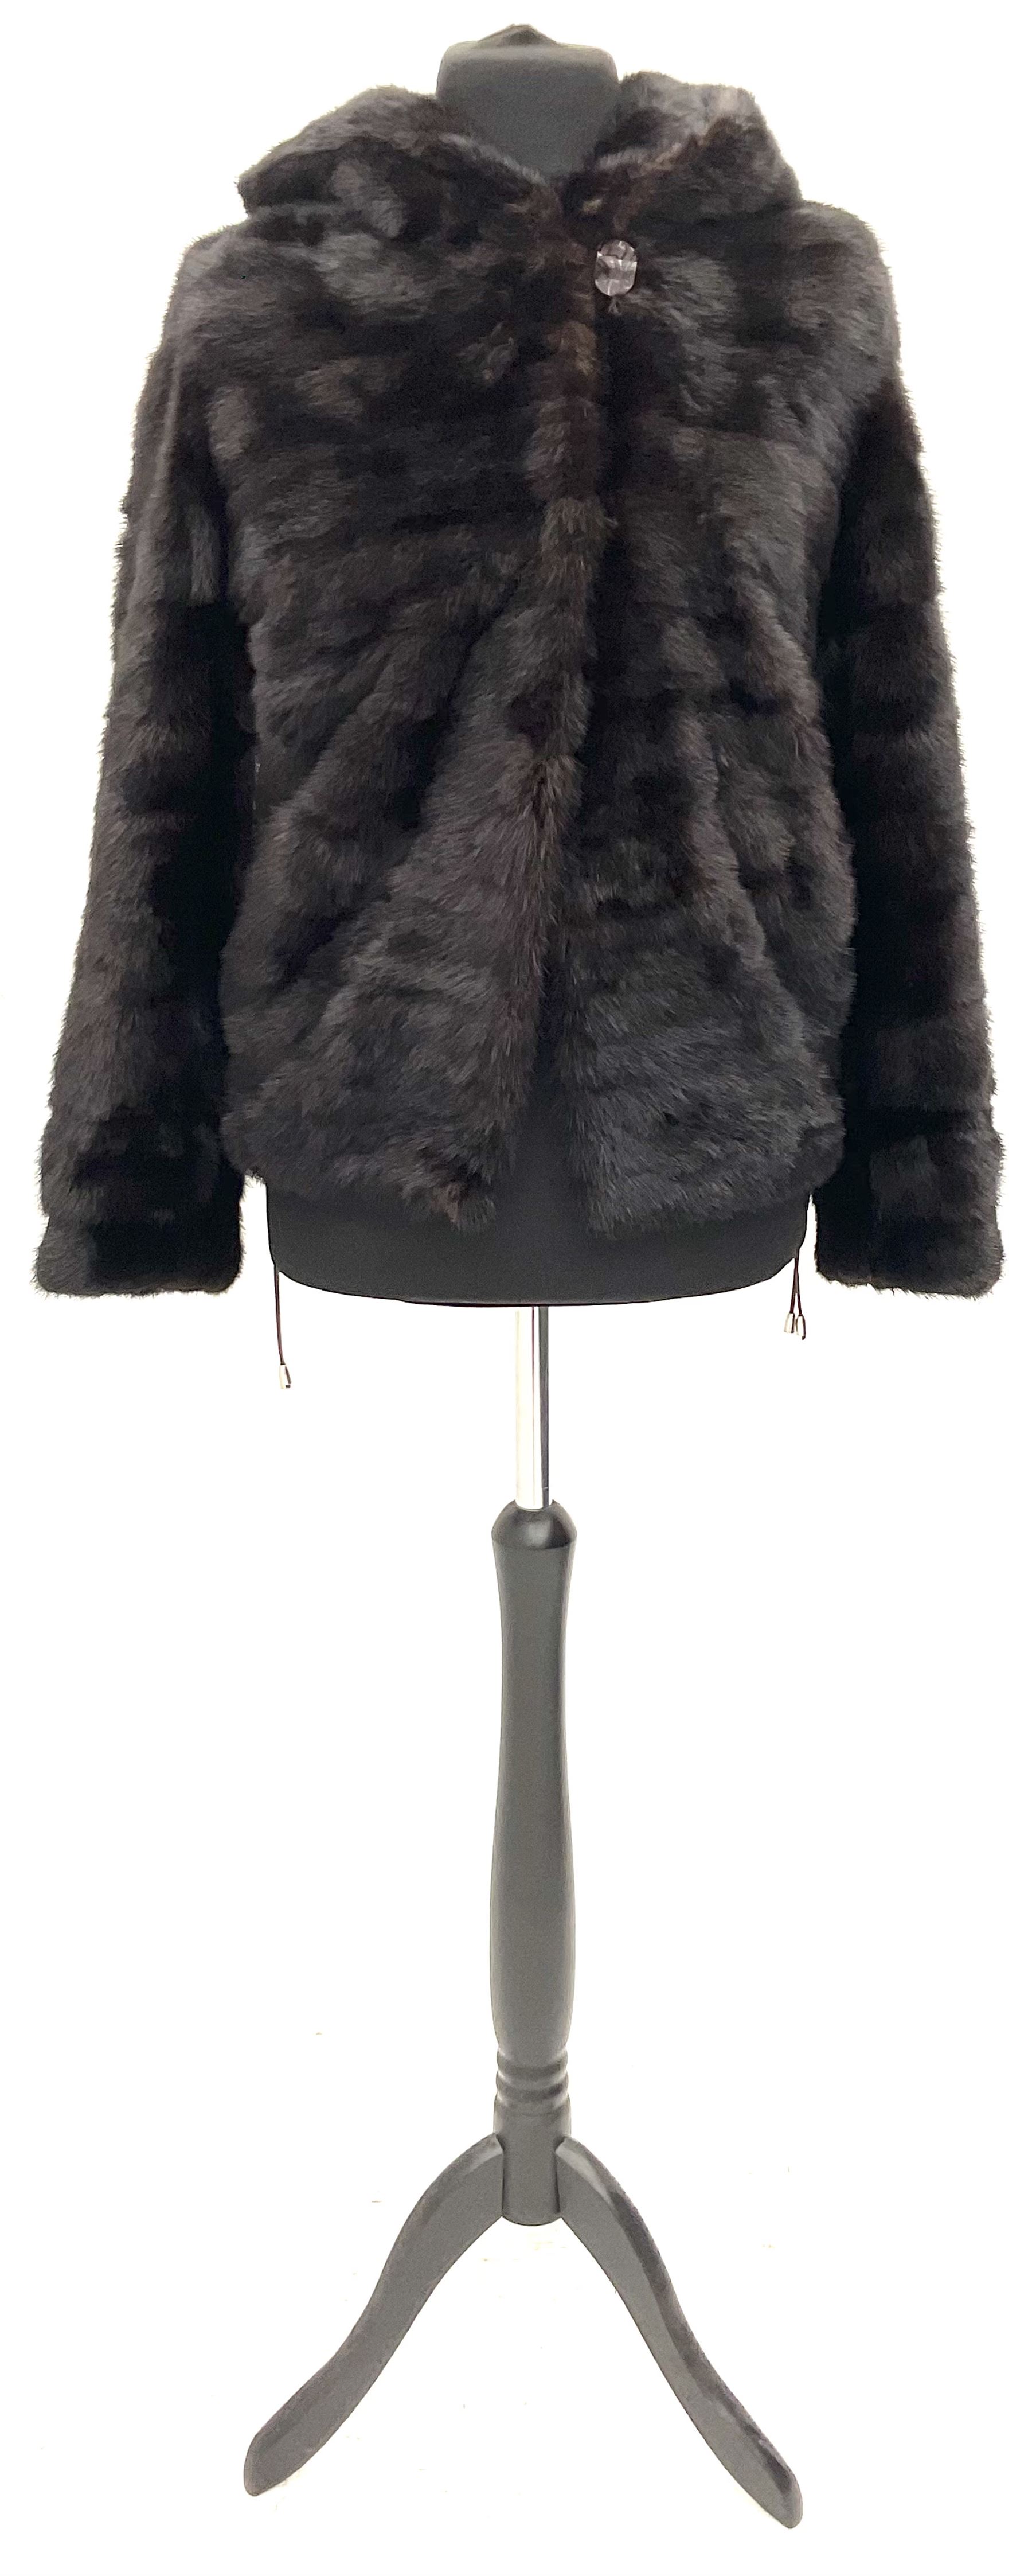 Modern cut lightweight nearly black mink jacket with integral hood